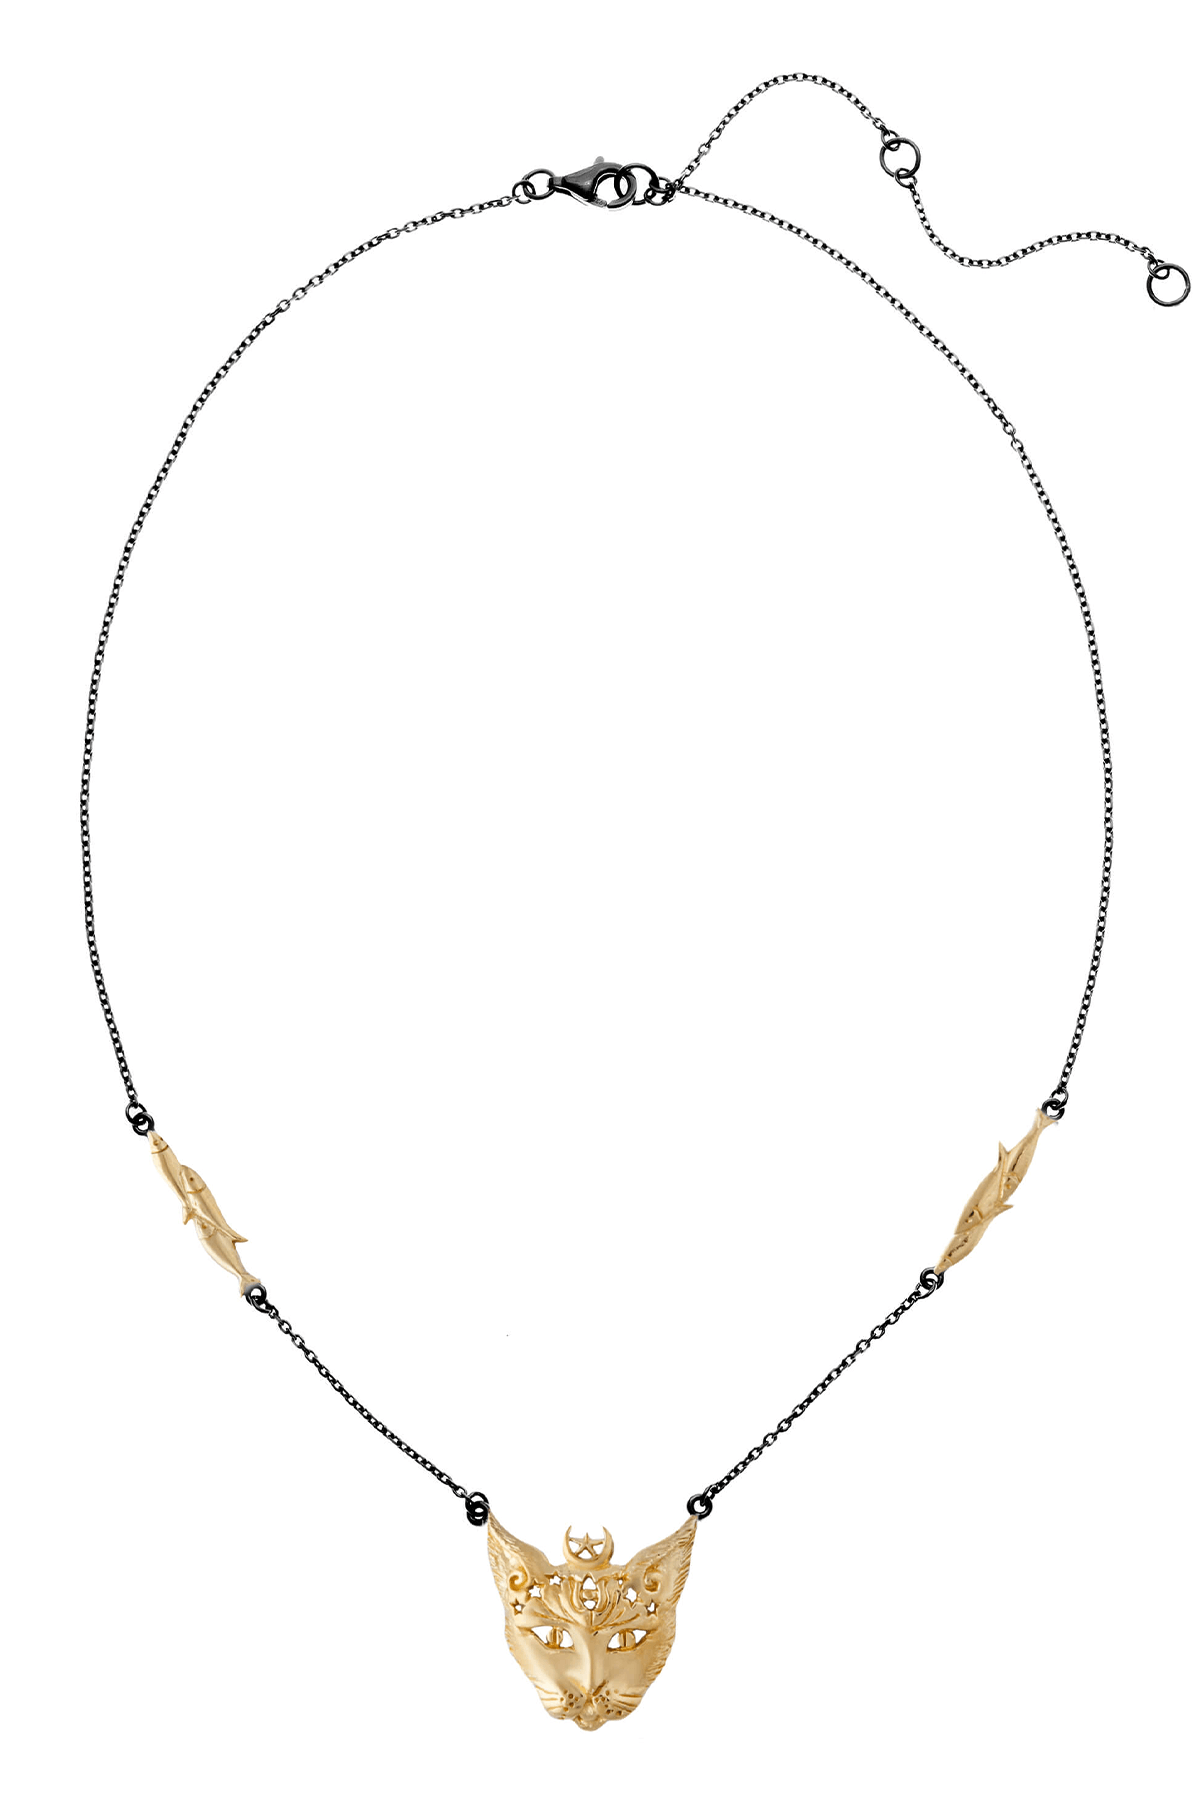 Bastet Goddess necklace. Silver, gold-plated, oxidized